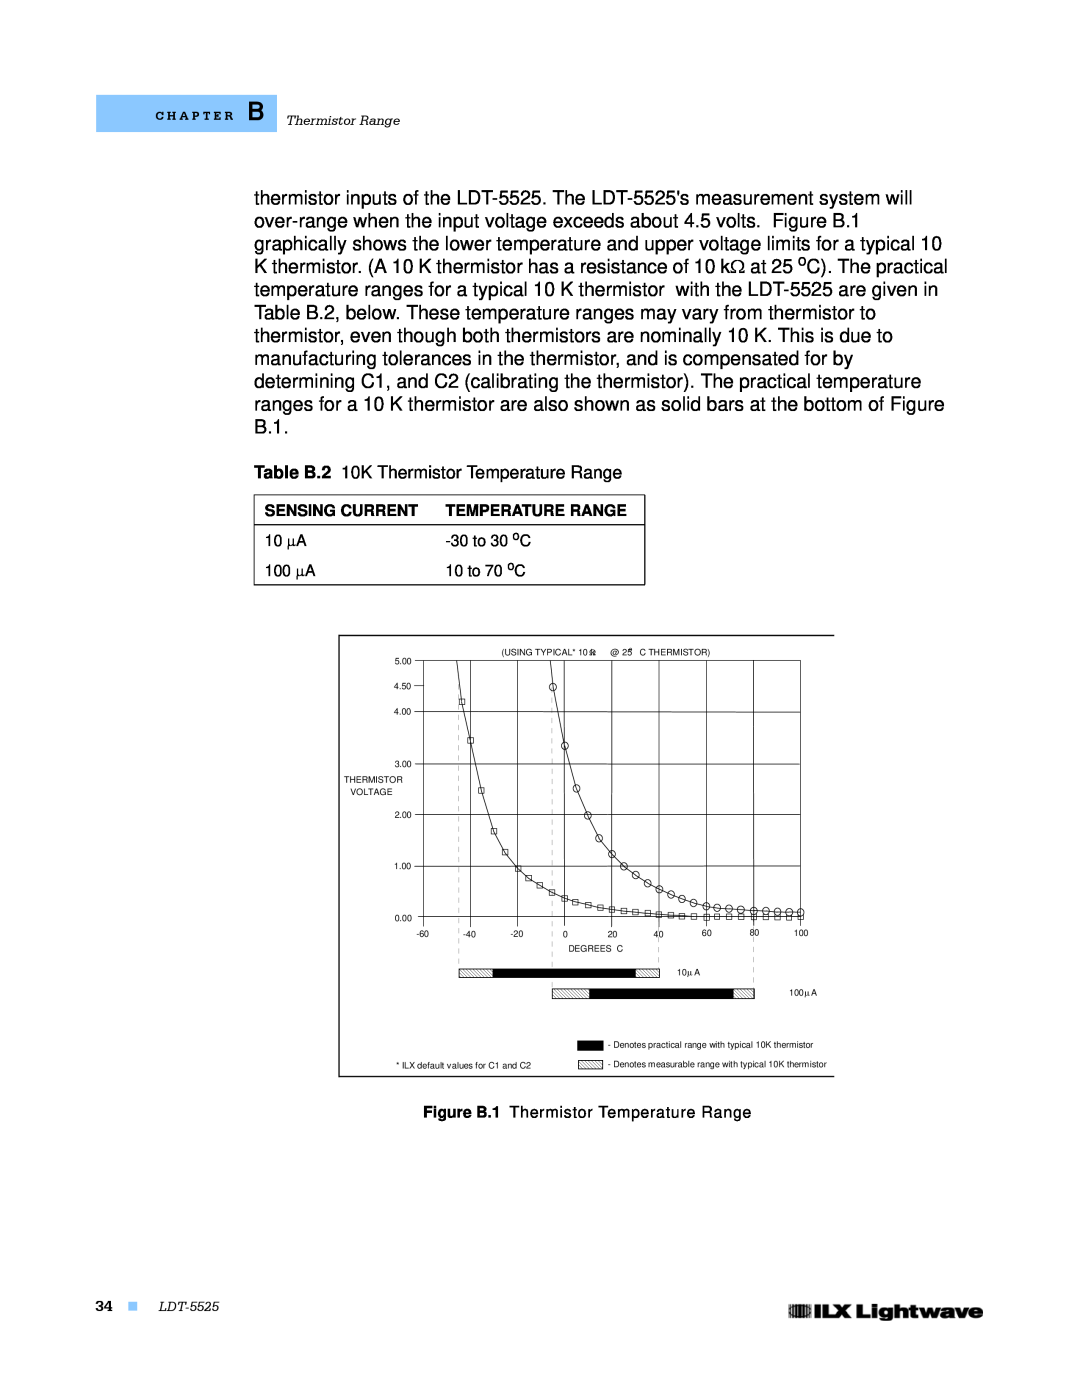 Lightwave Communications LDT-5525 manual Table B.2 10K Thermistor Temperature Range, Sensing Current 